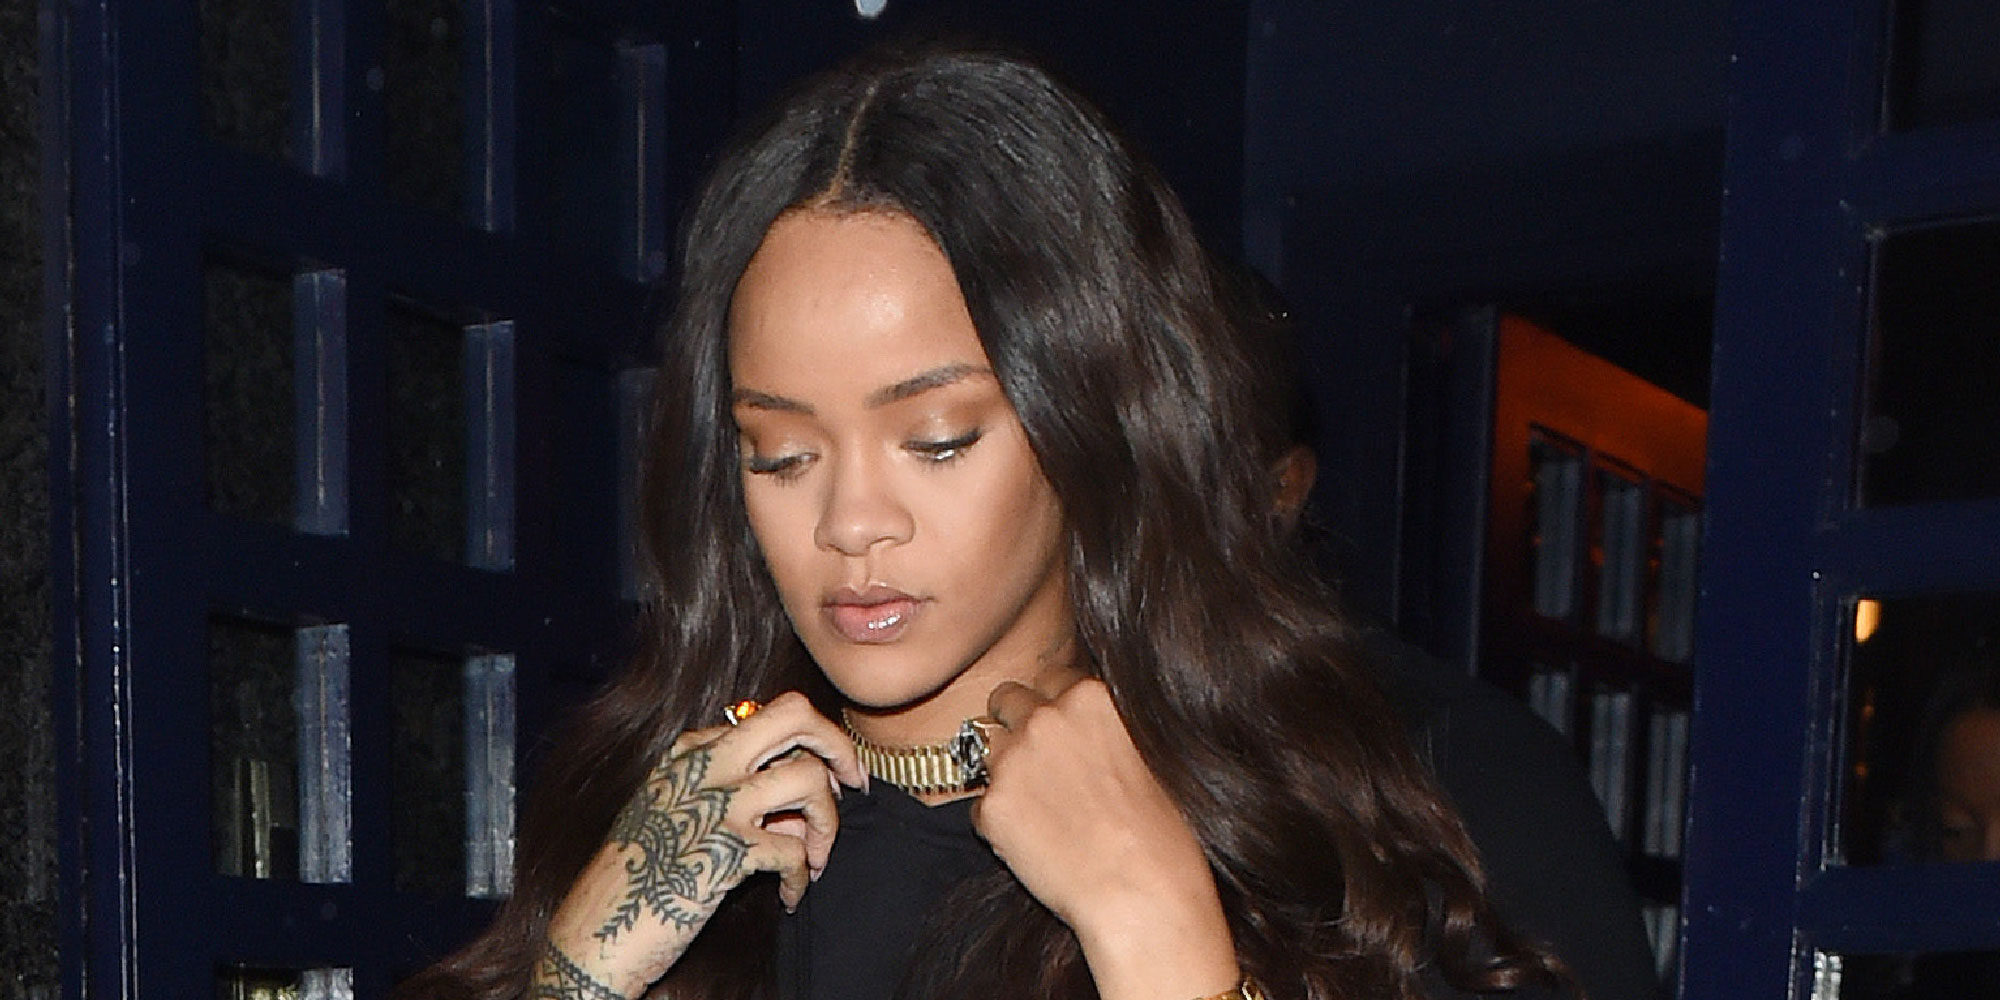 El increíble cambio radical de Rihanna: de melena lisa a... ¡rastas!